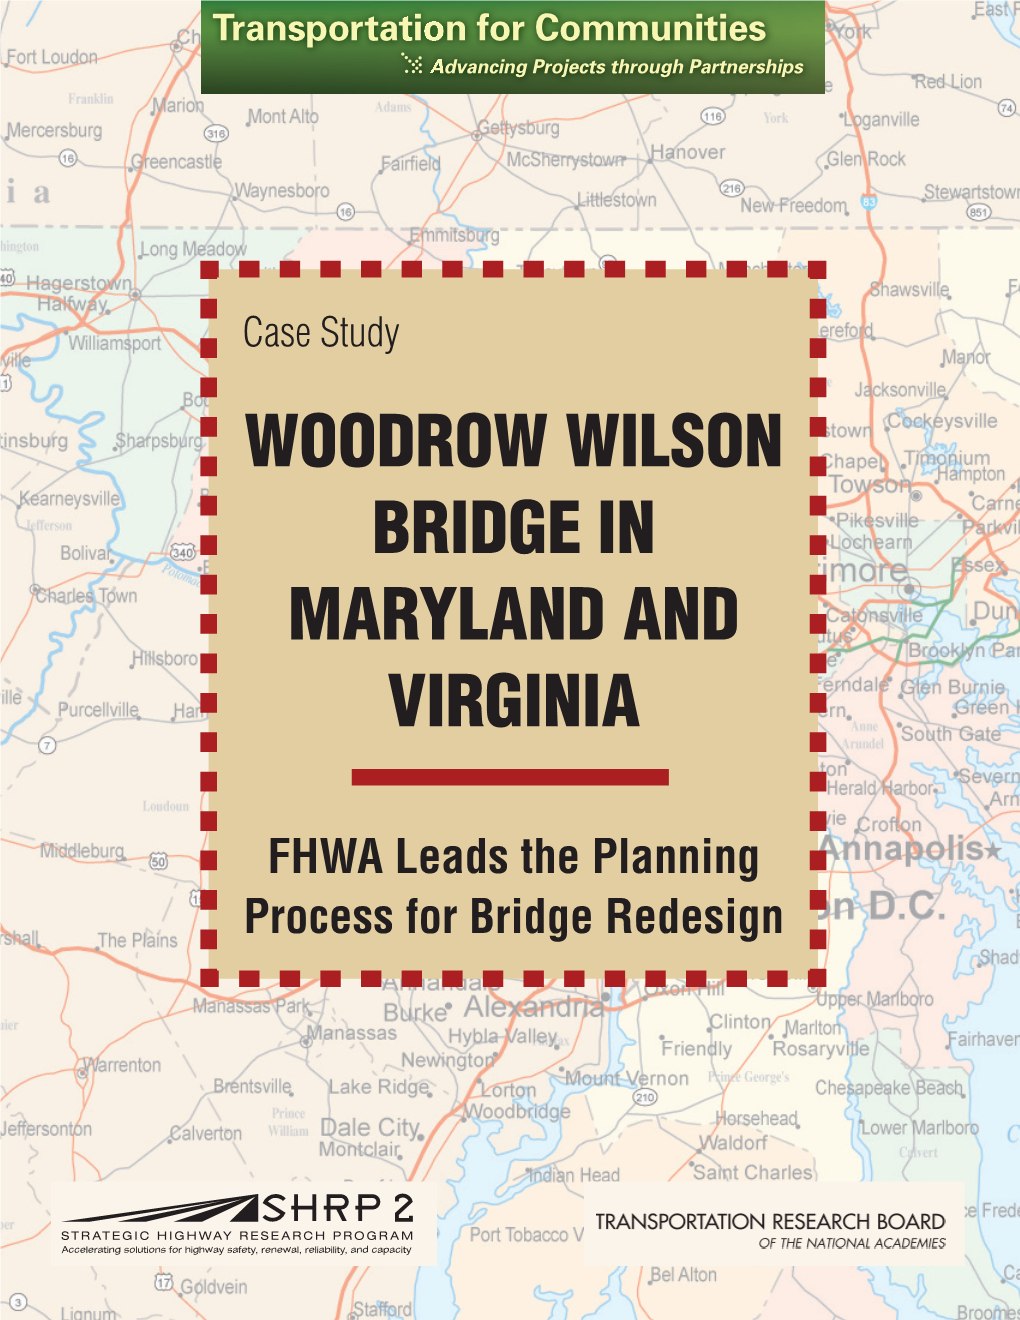 Woodrow Wilson Bridge in Maryland and Virginia